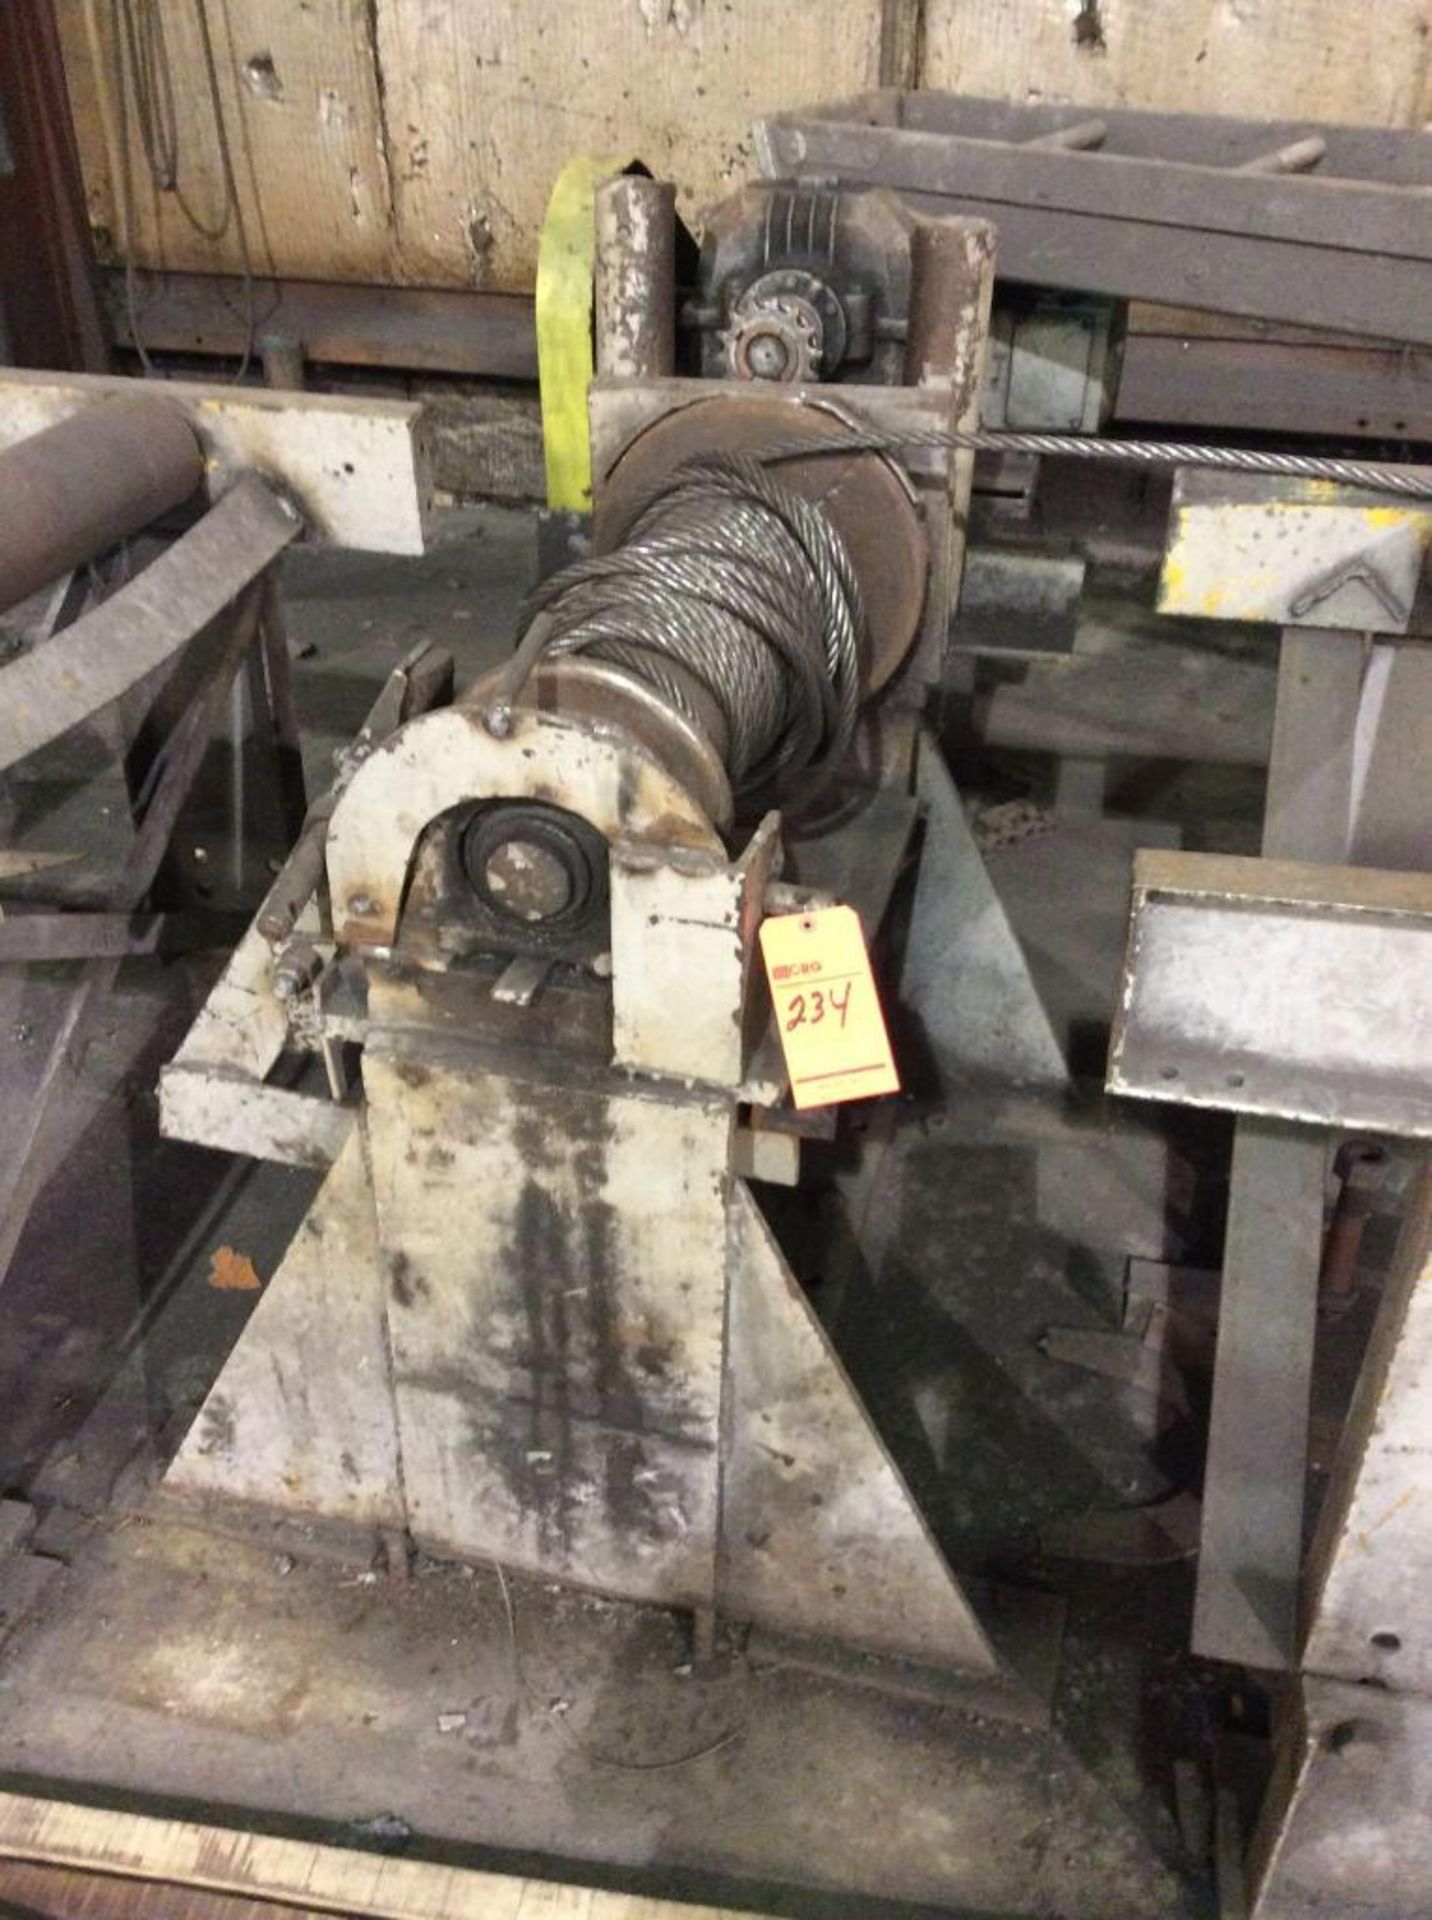 Custom winch (located between wheelabrator and girder welder)